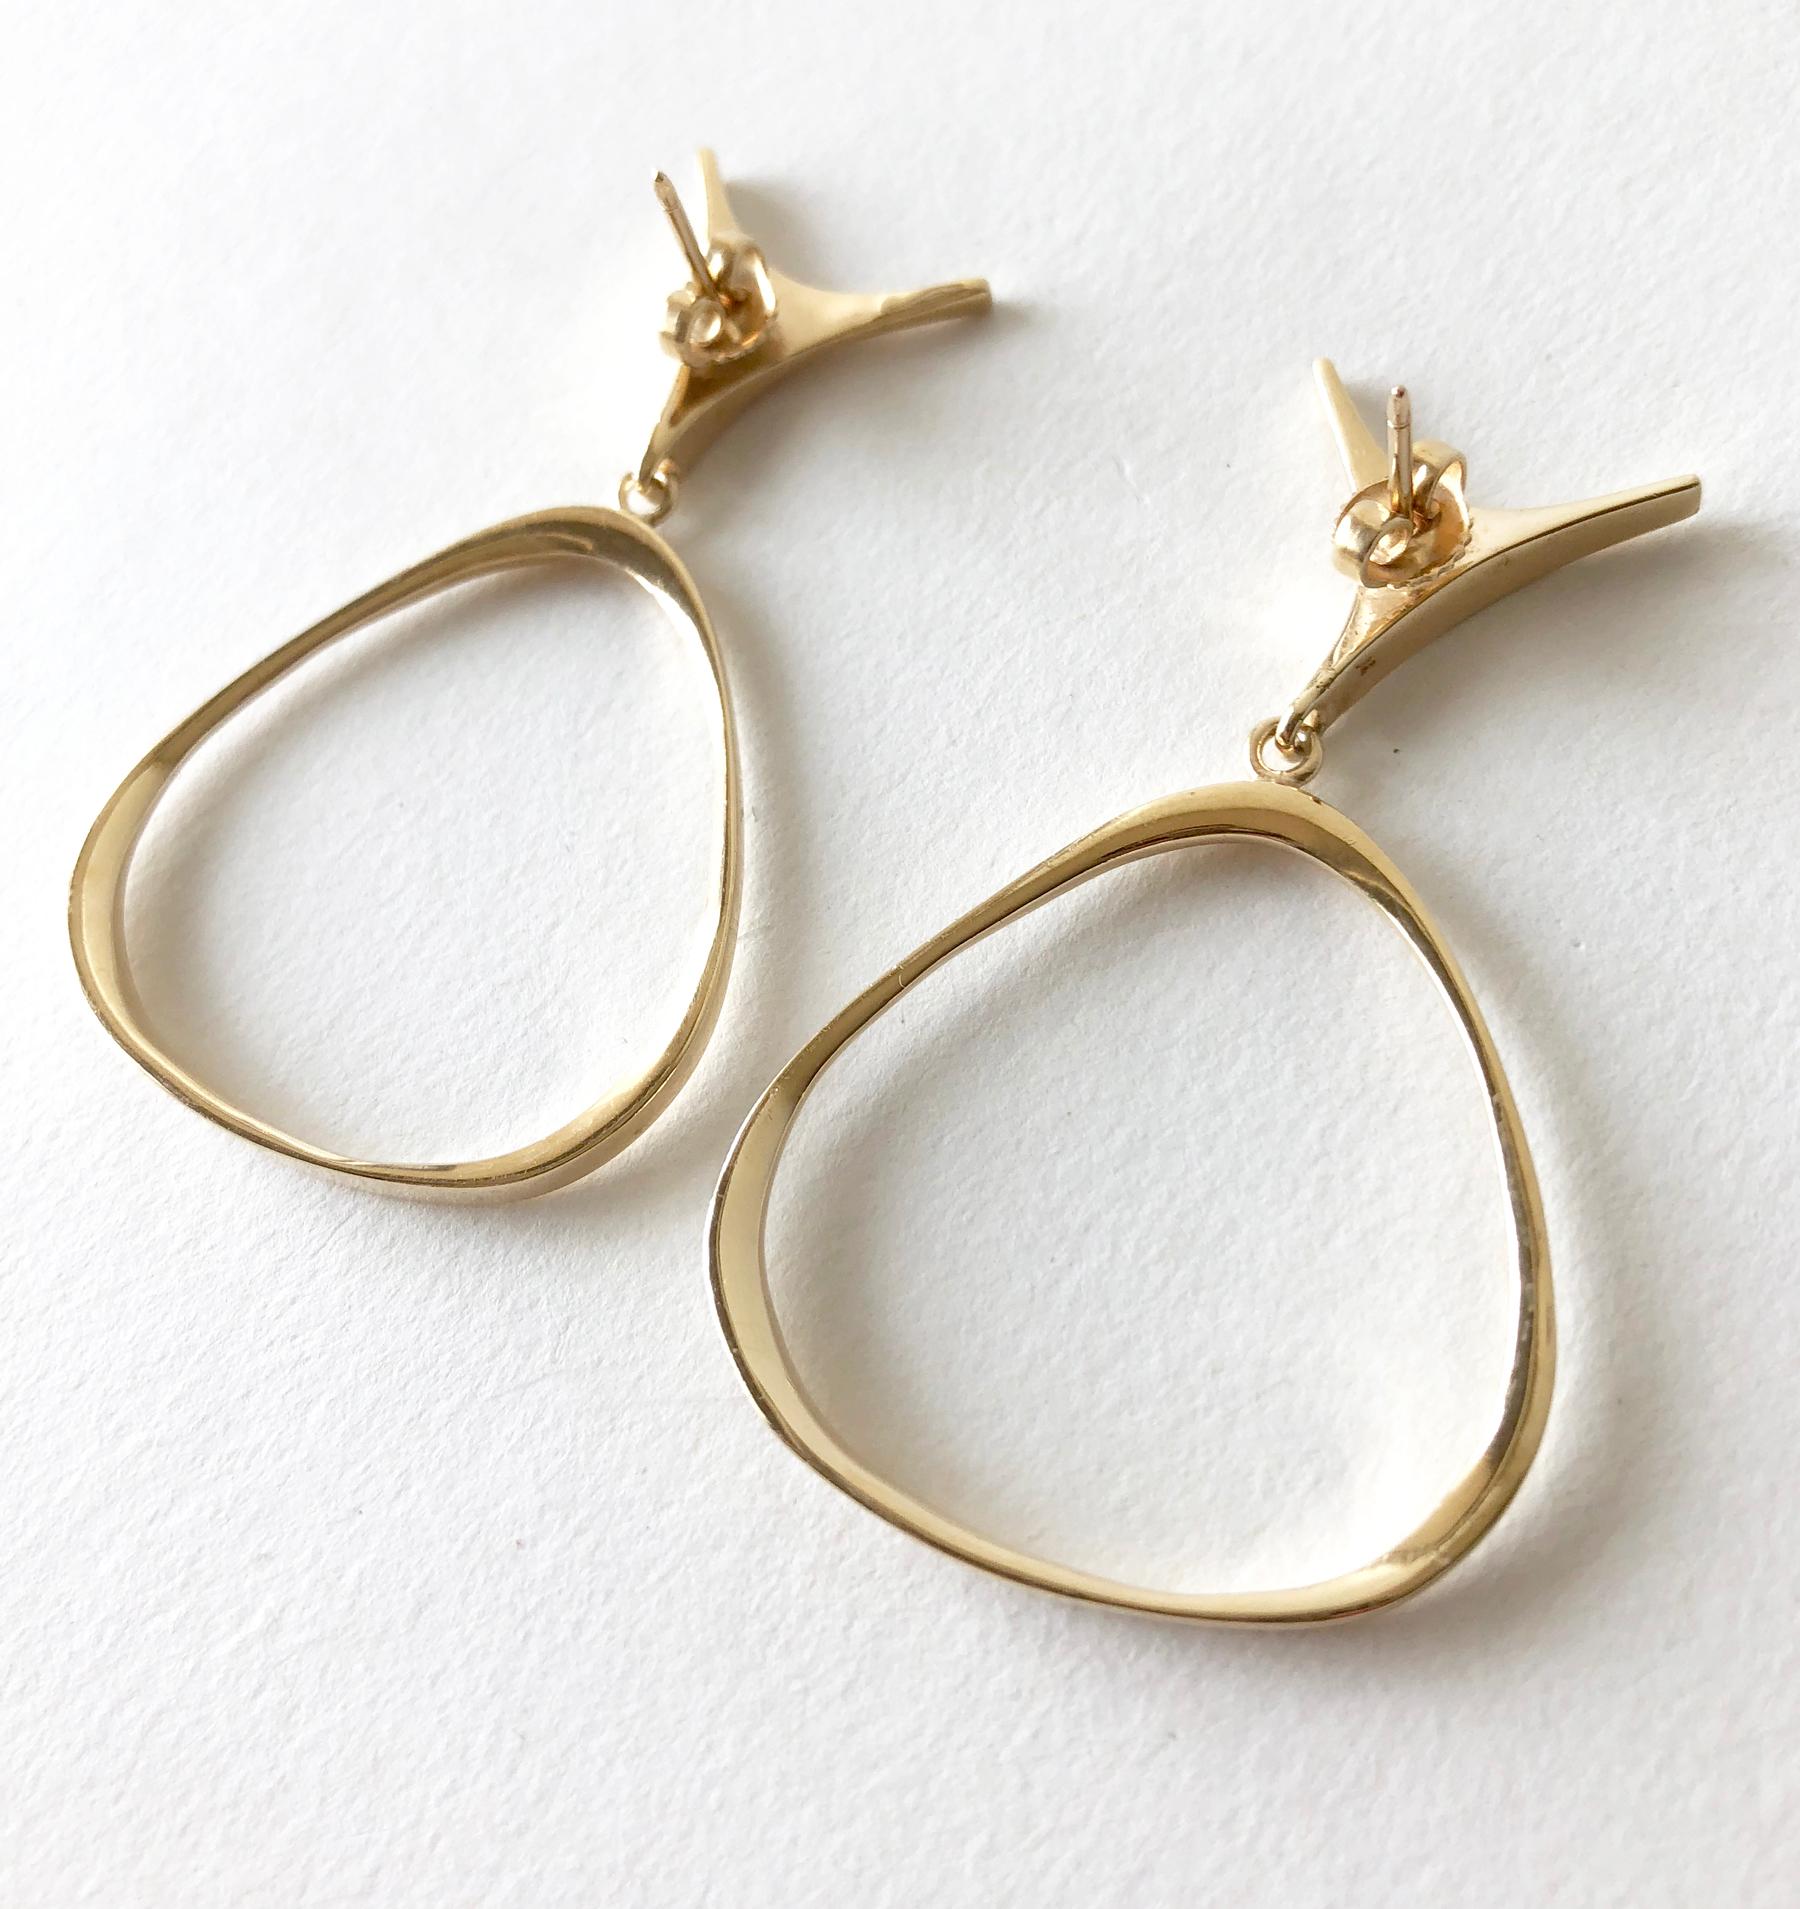 1950's abstract modernist 14k gold pierced earrings created by Ed Wiener of New York, New York.  Earrings measure 2 1/8